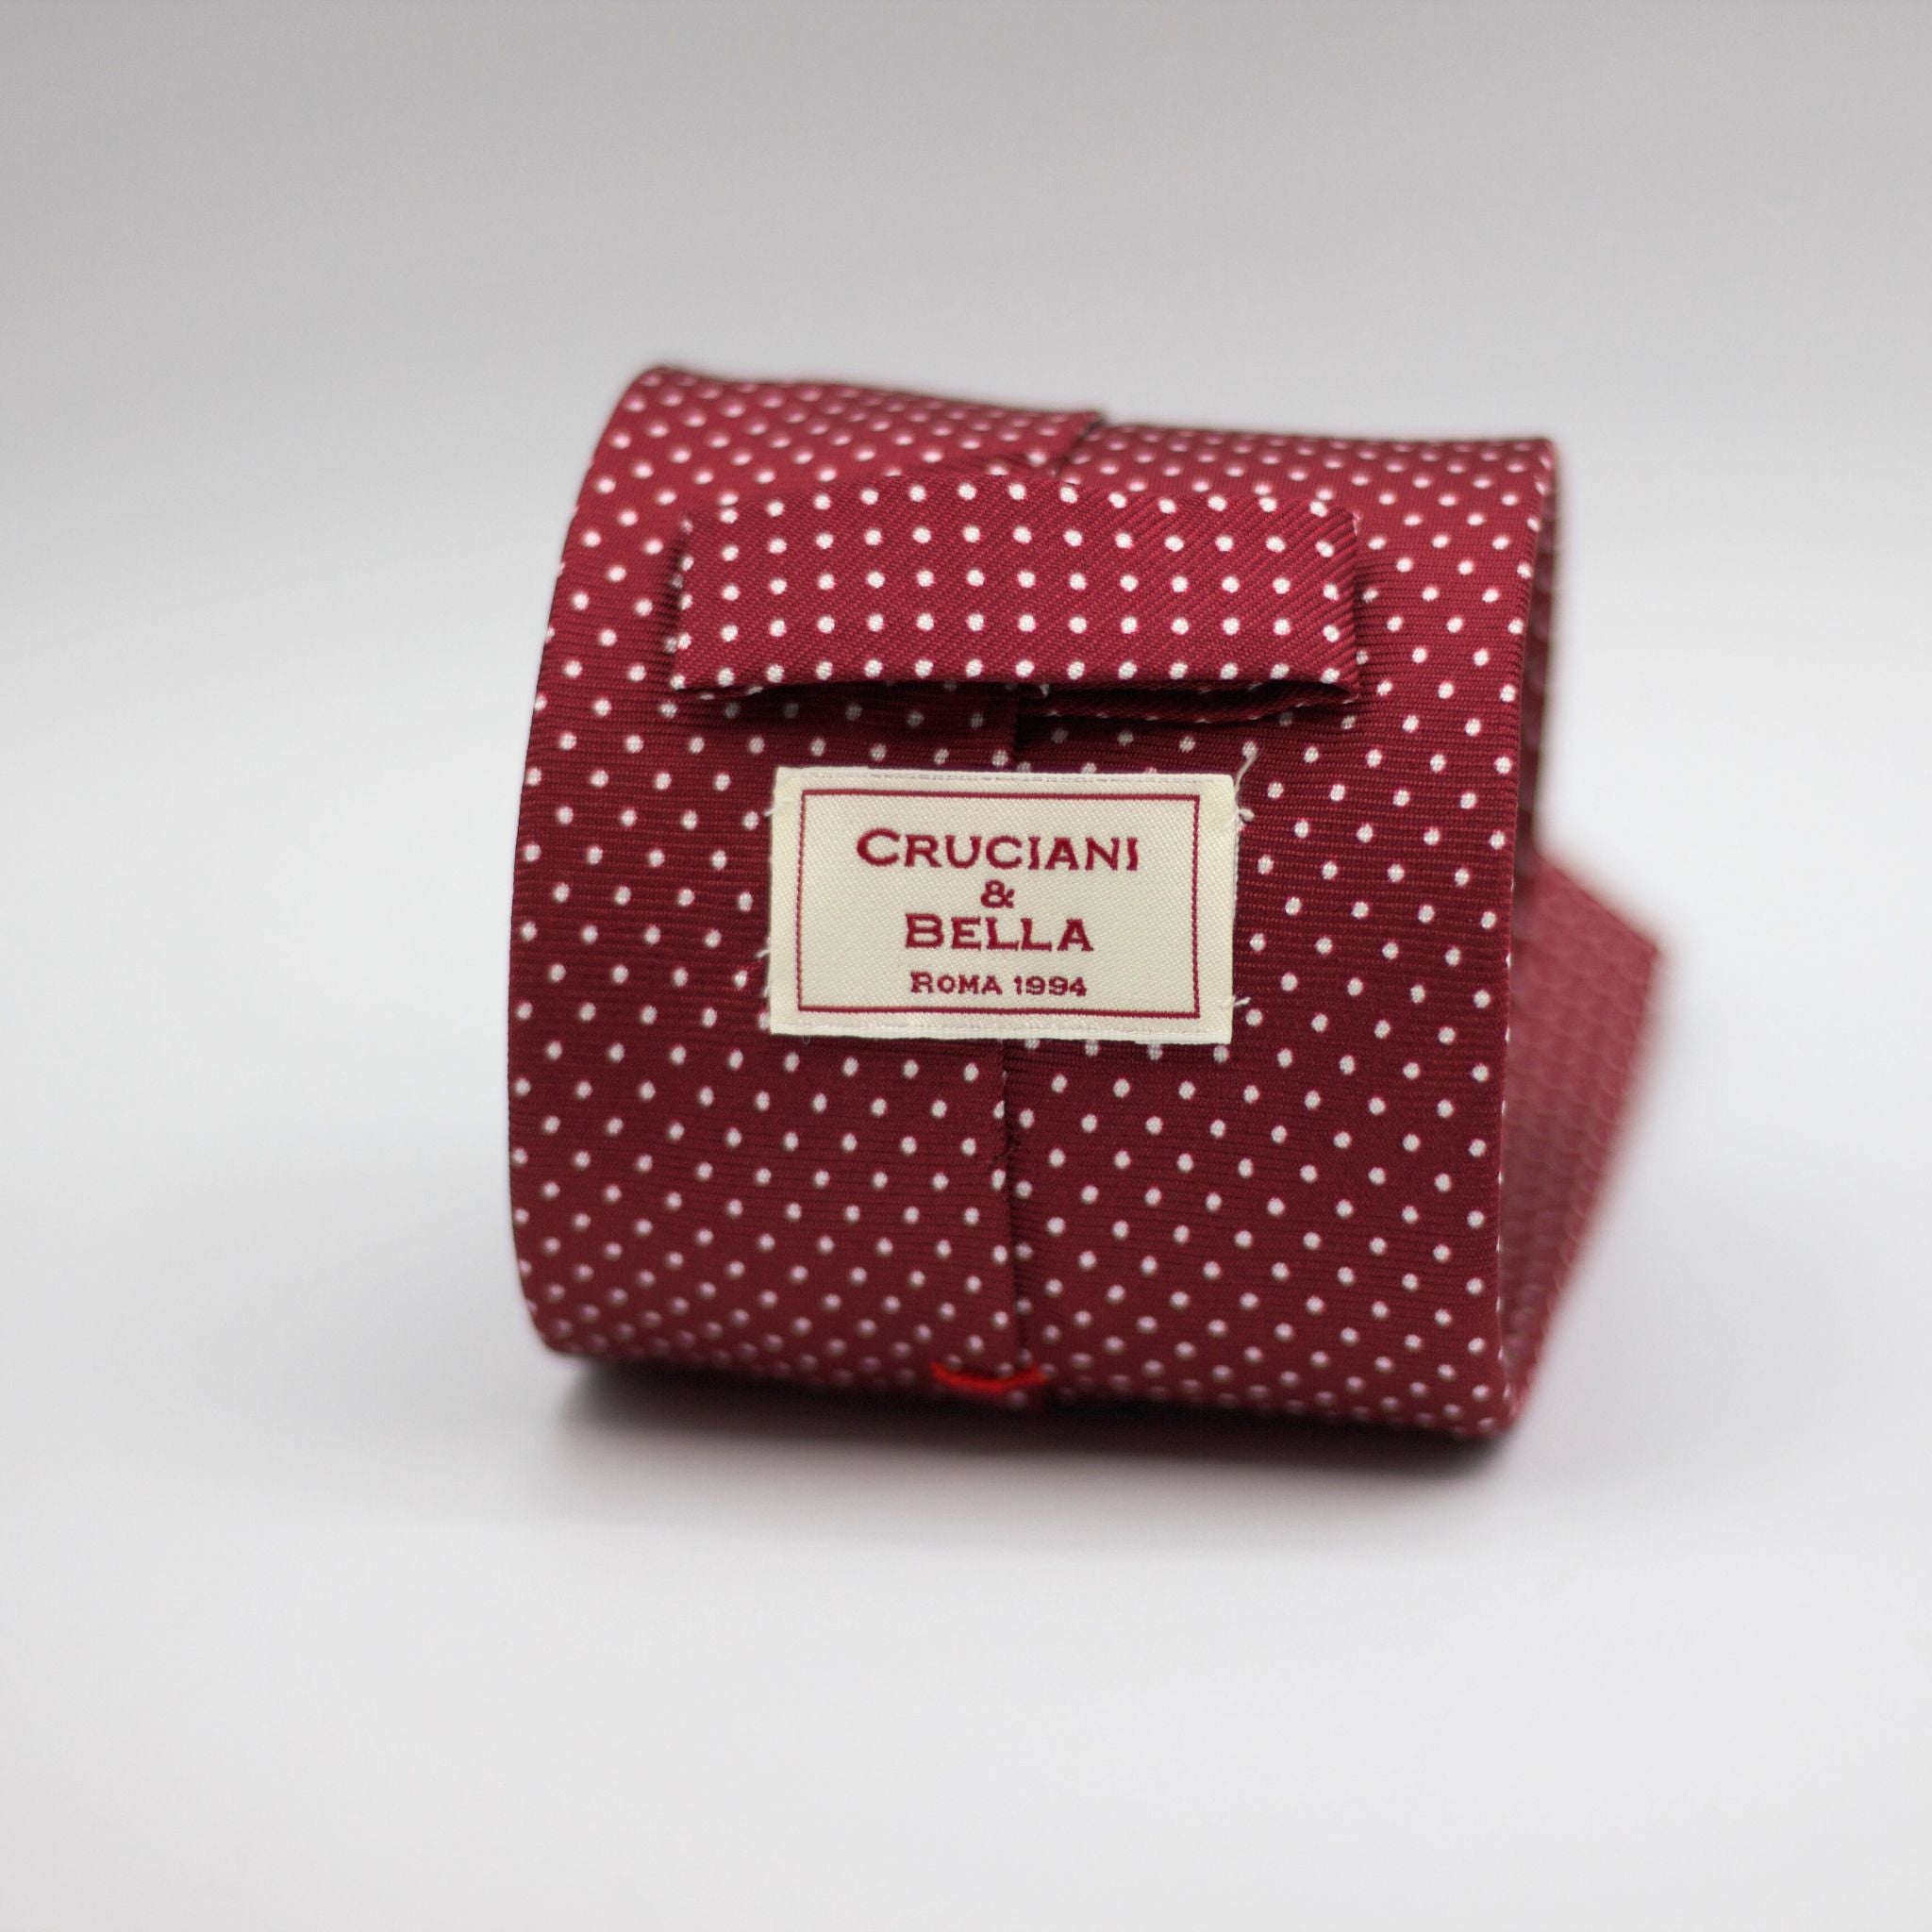 Cruciani & Bella 100% Silk Printed Self-Tipped  Burgundy, White Pin Dots Tie Handmade in Rome, Italy. 8 cm x 150 cm